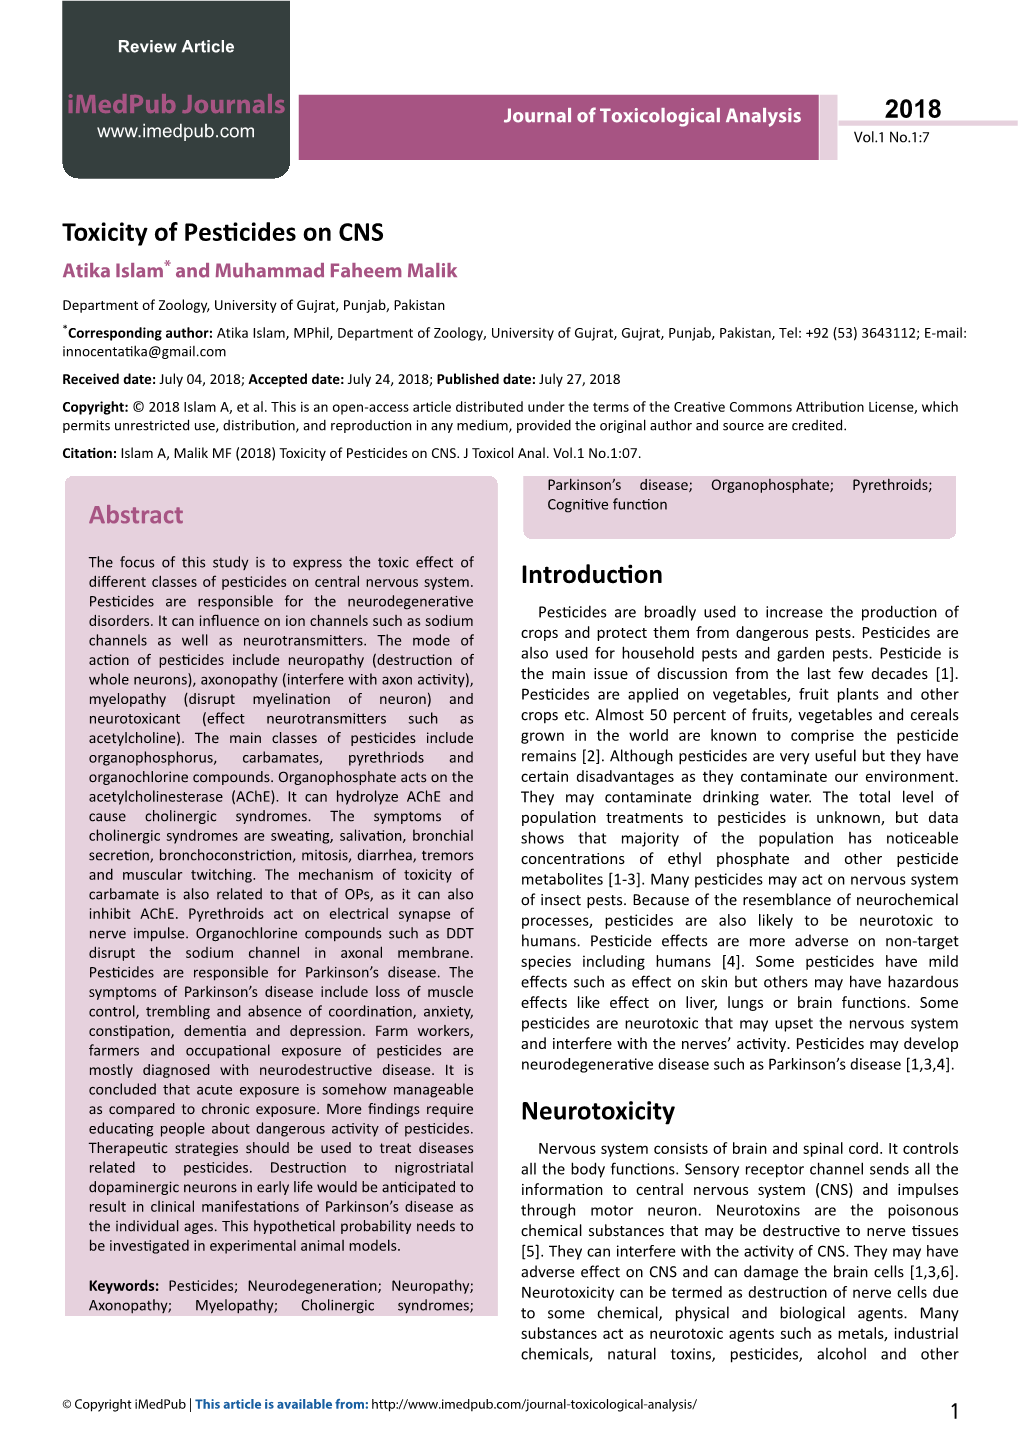 Toxicity-Of-Pesticides-On-Cns.Pdf